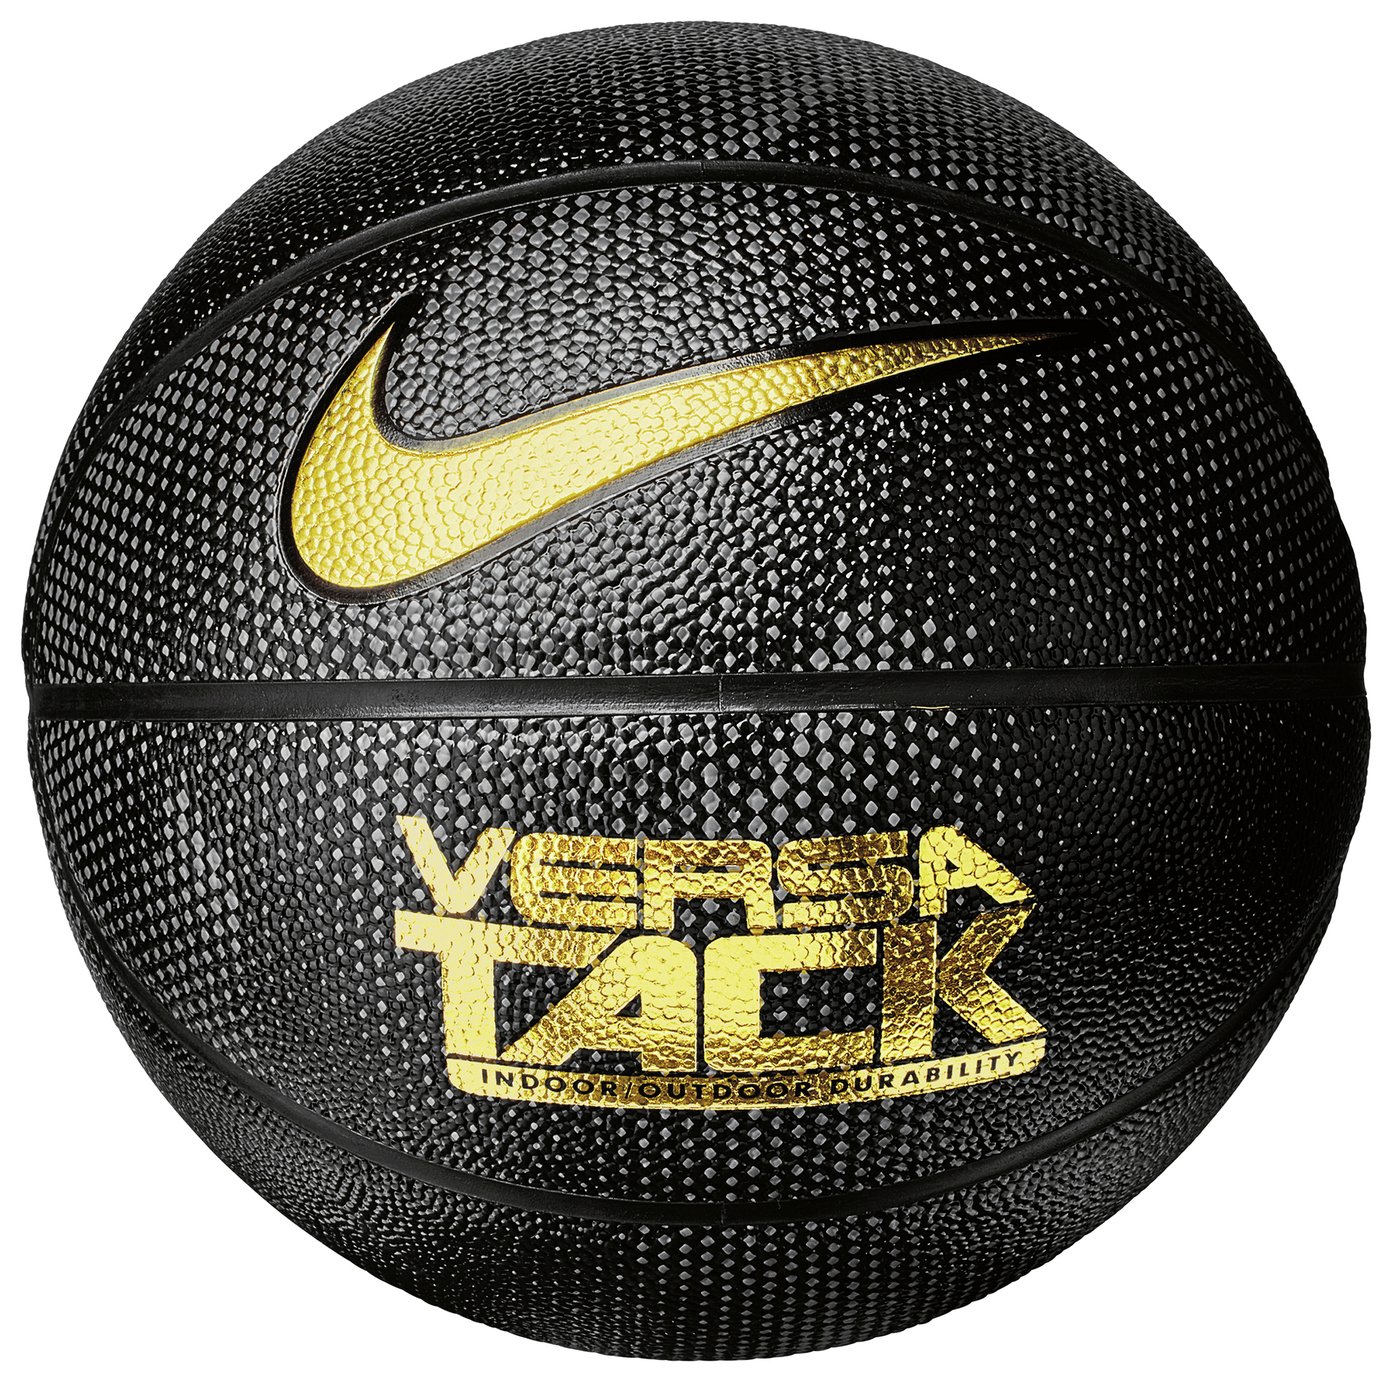 Nike Versa Tack Basketball Reviews